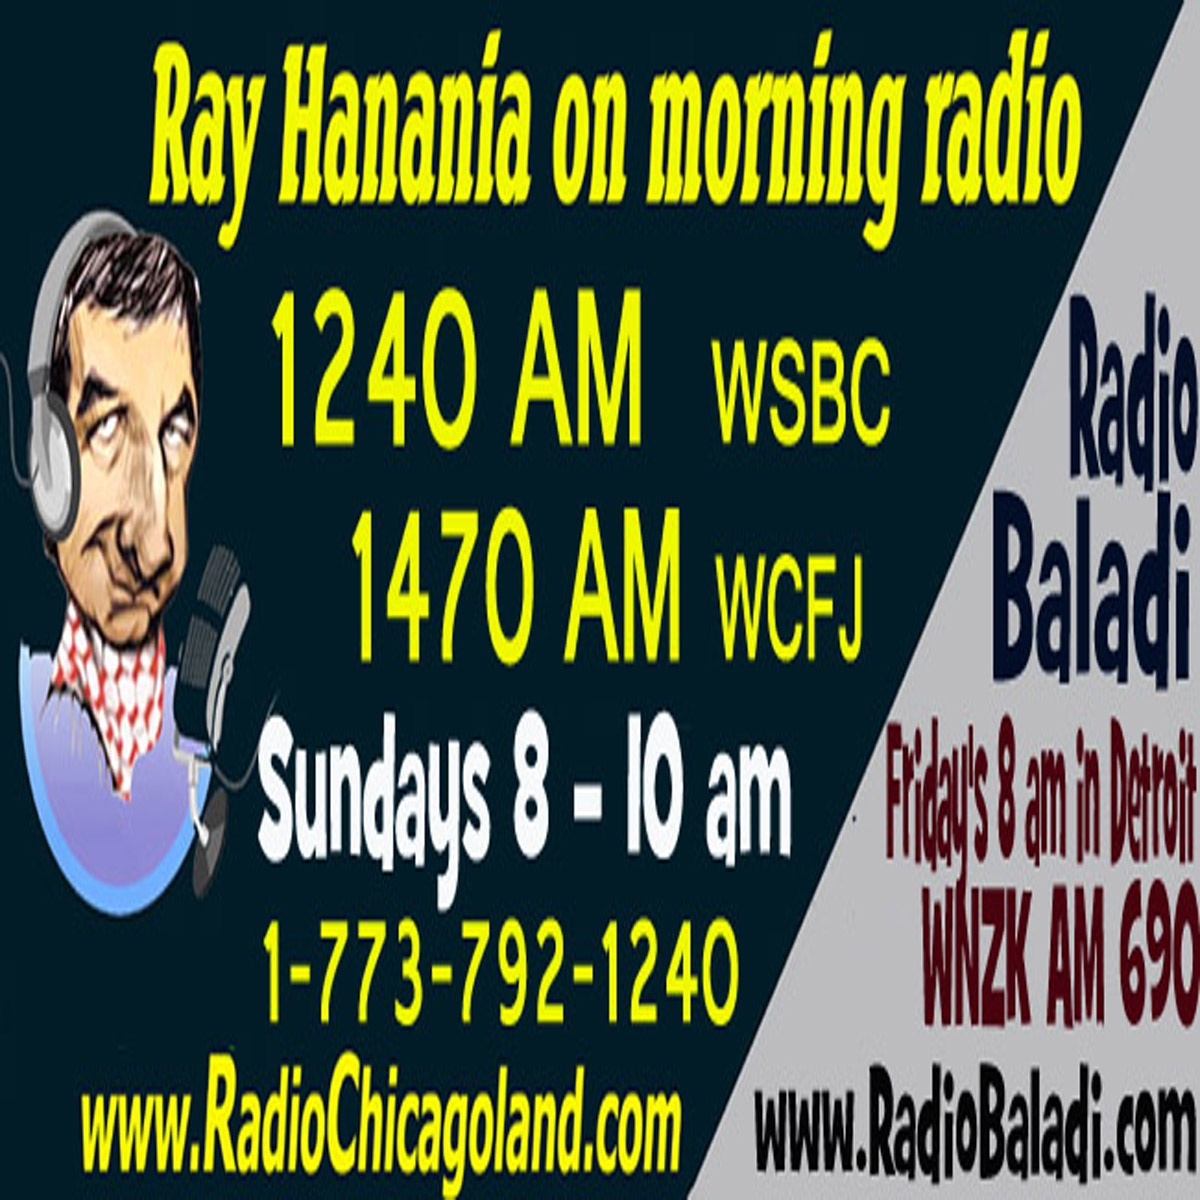 08-03-12 Radio Baladi with Janet McMahon